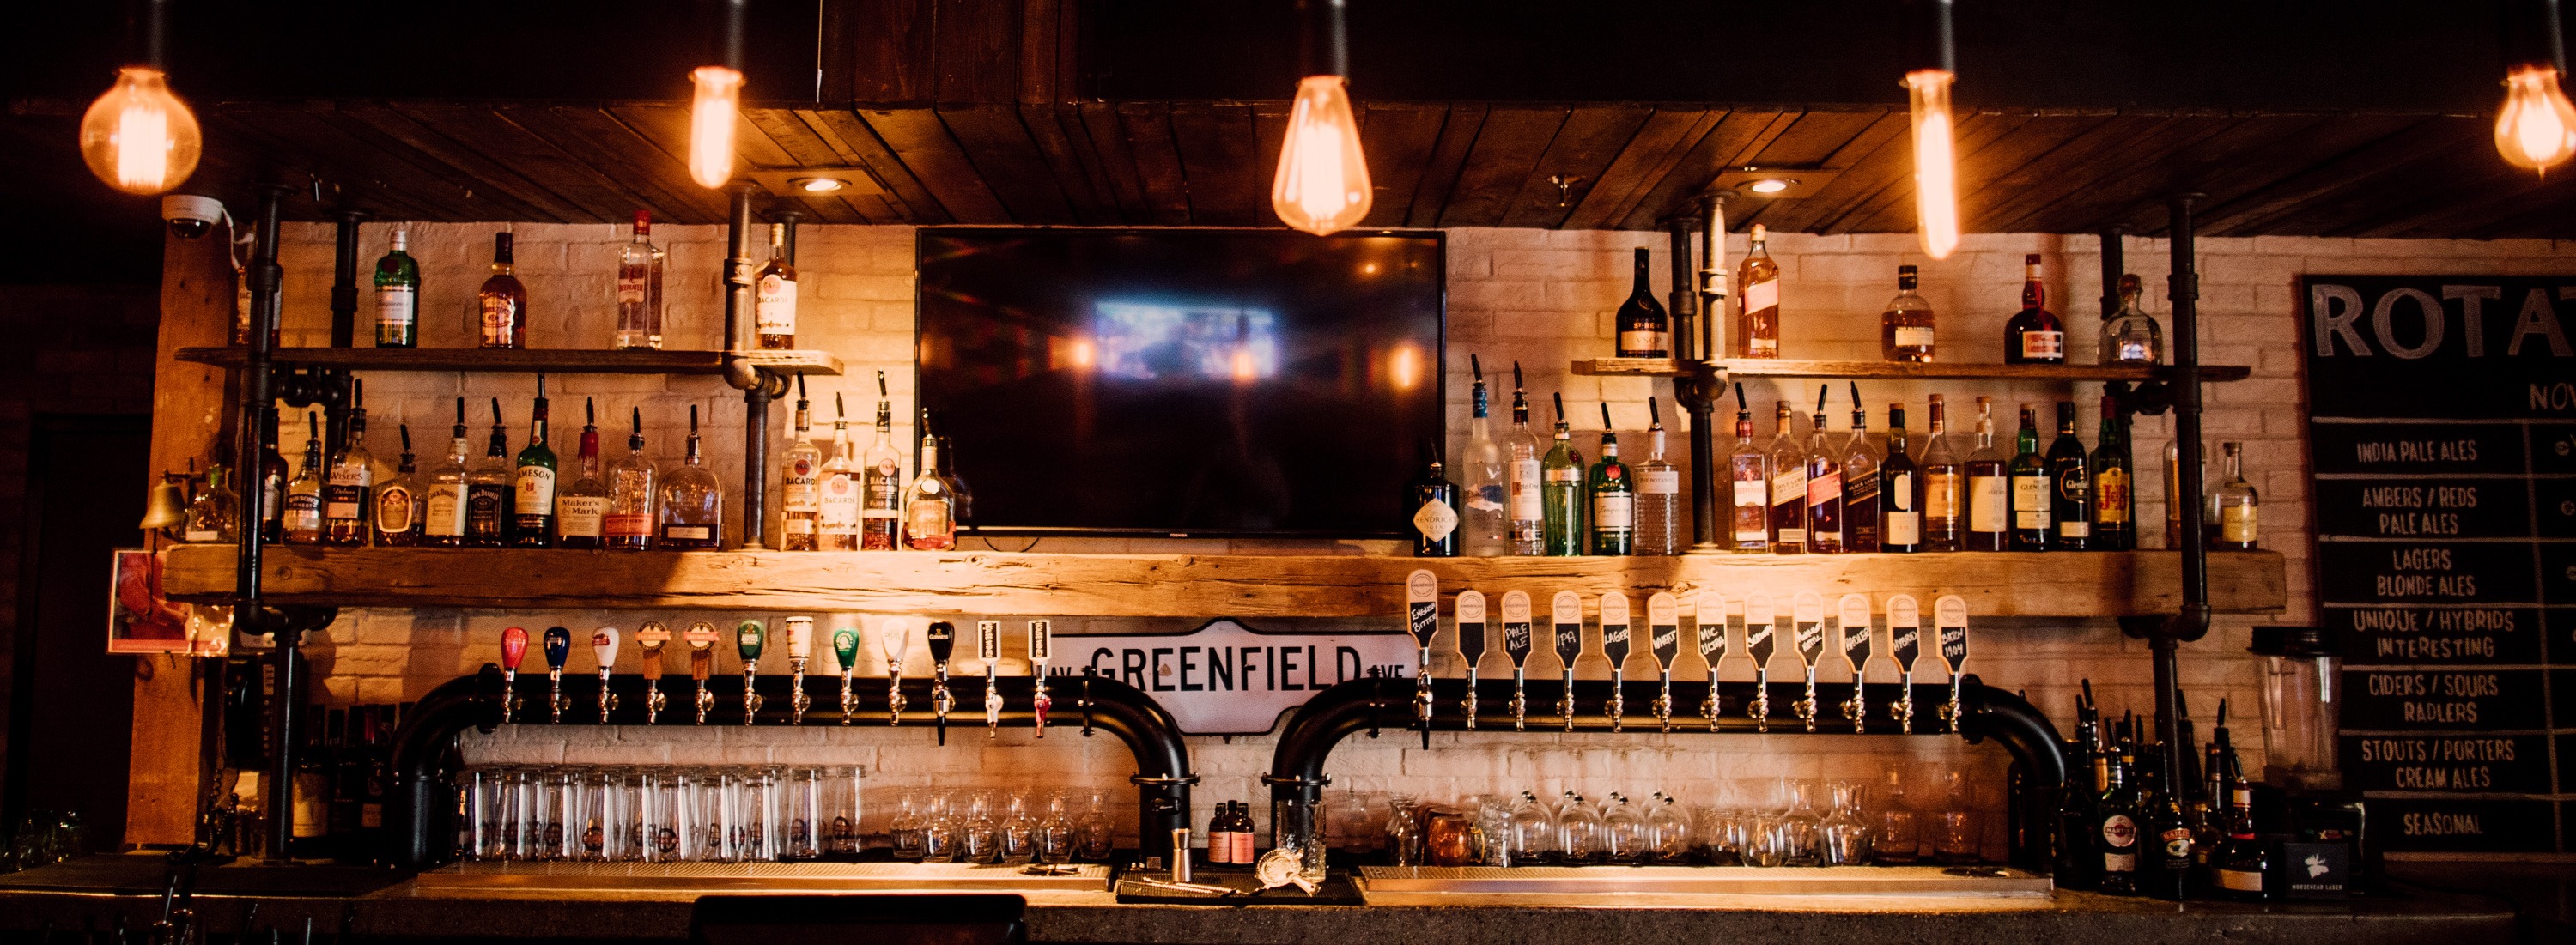 Greenfield's Bar